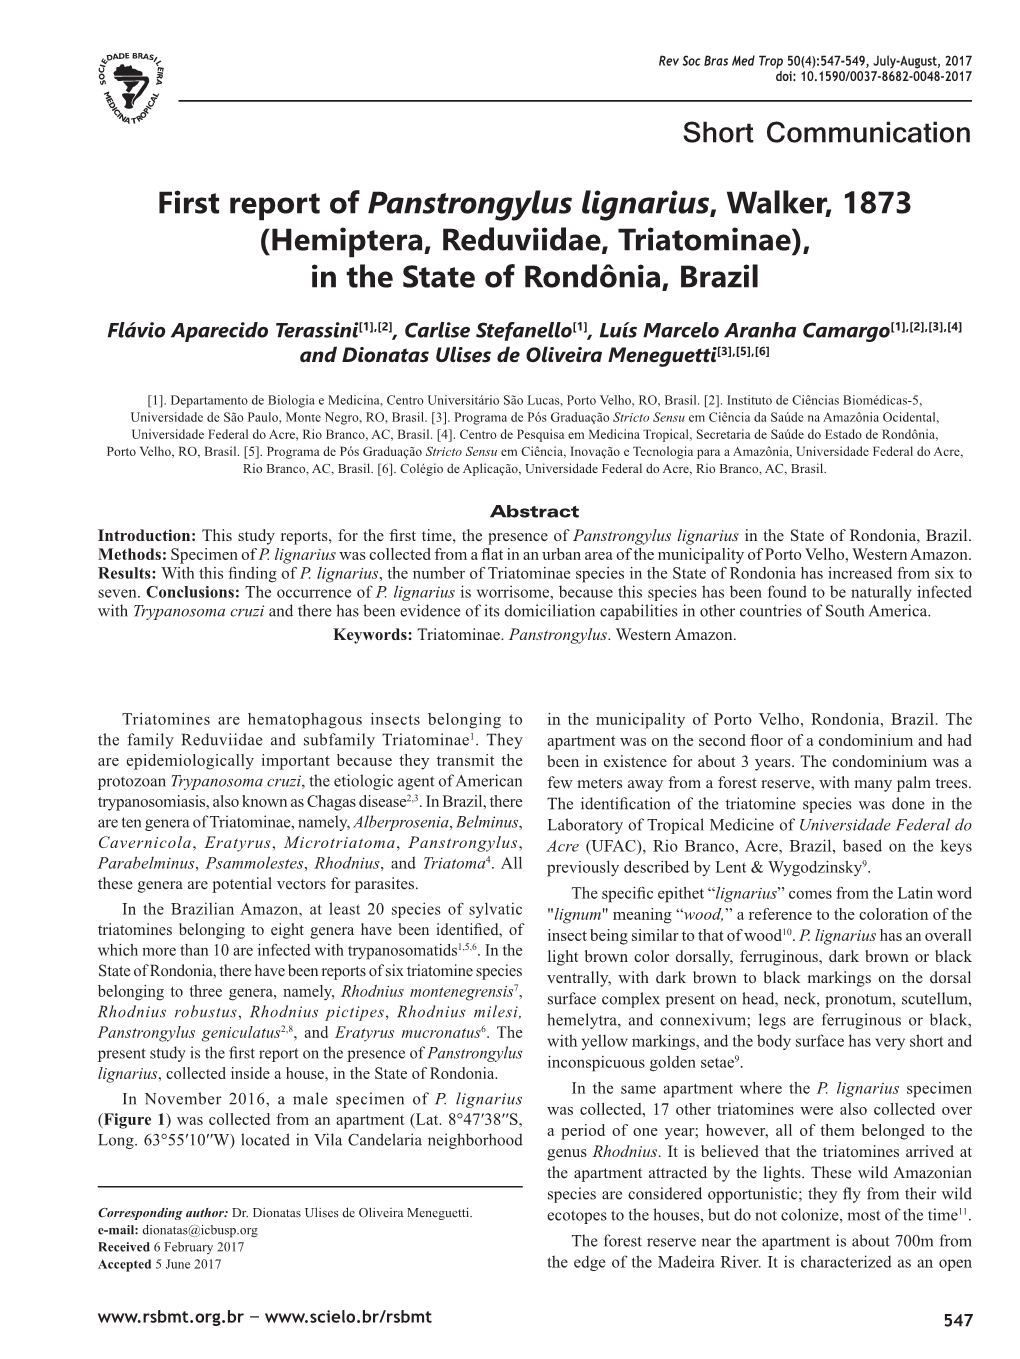 First Report of Panstrongylus Lignarius, Walker, 1873 (Hemiptera, Reduviidae, Triatominae), in the State of Rondônia, Brazil